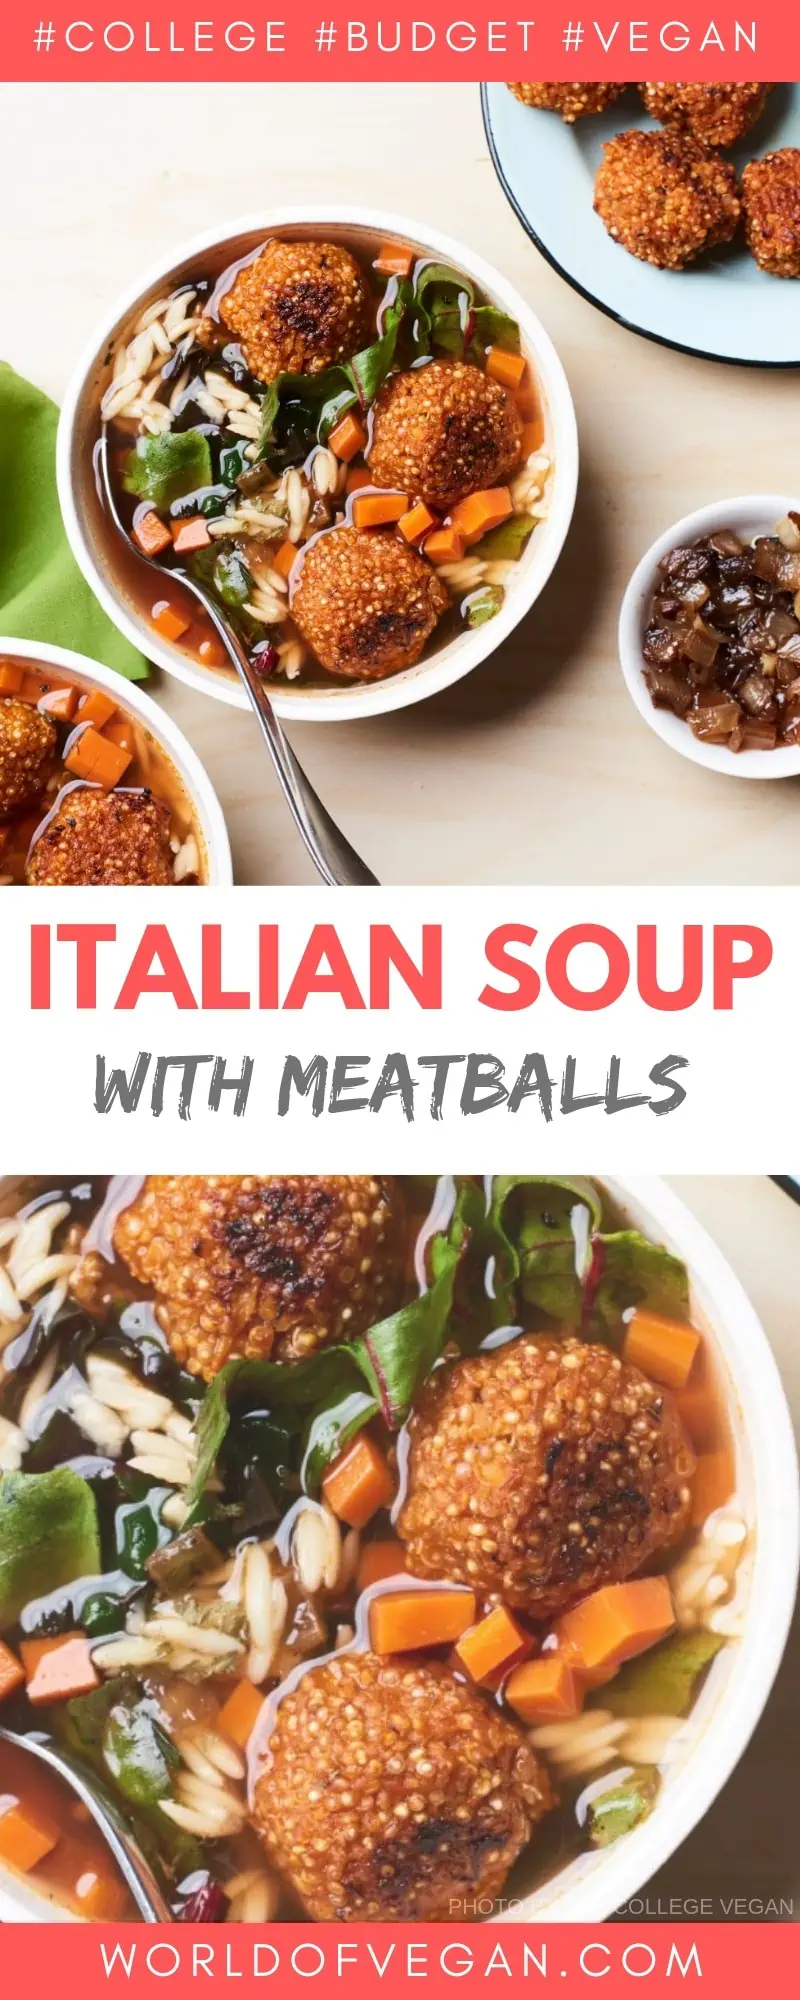 Italian Wedding Soup with Quinoa Meatballs | Vegan in College | World of Vegan | #soup #college #recipes #meatballs #quinoa #healthy #worldofvegan